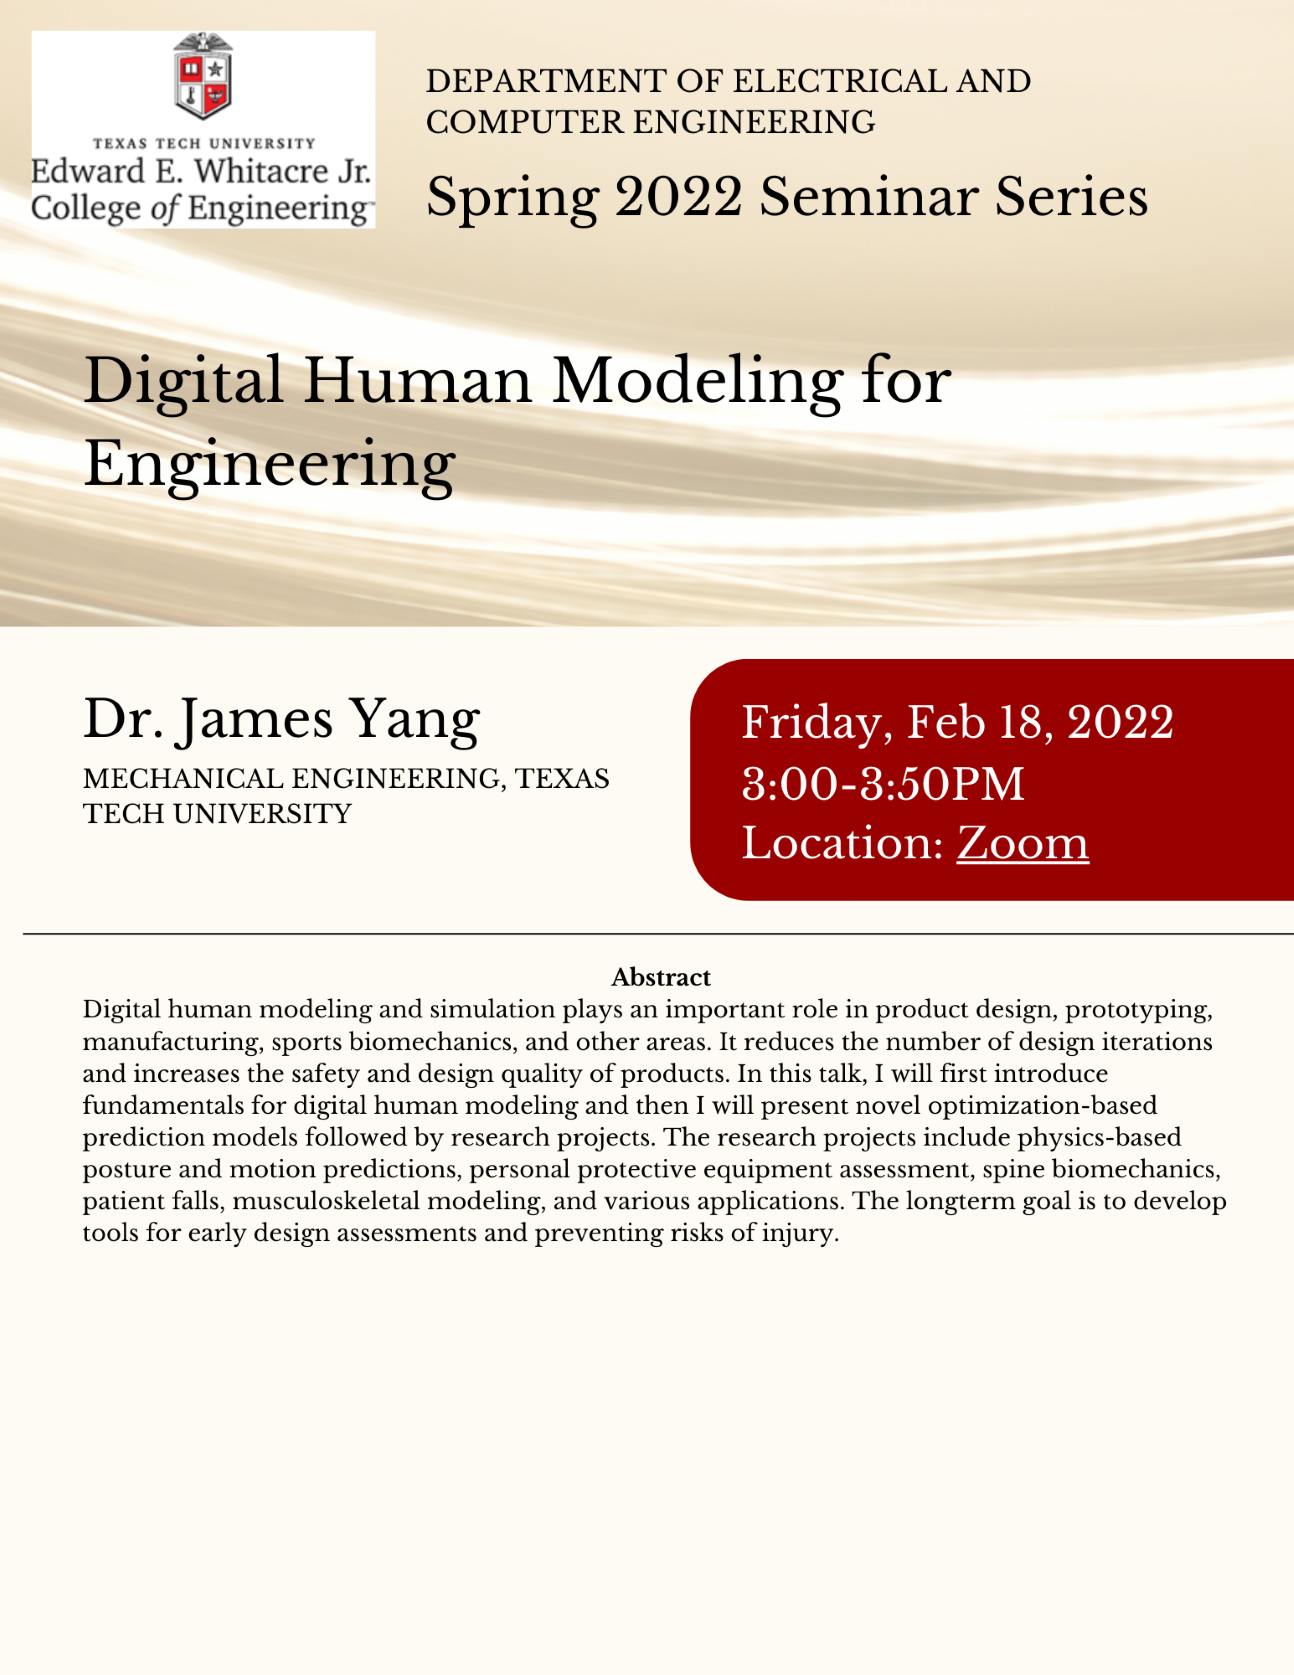 Digital Human Modeling for Engineering